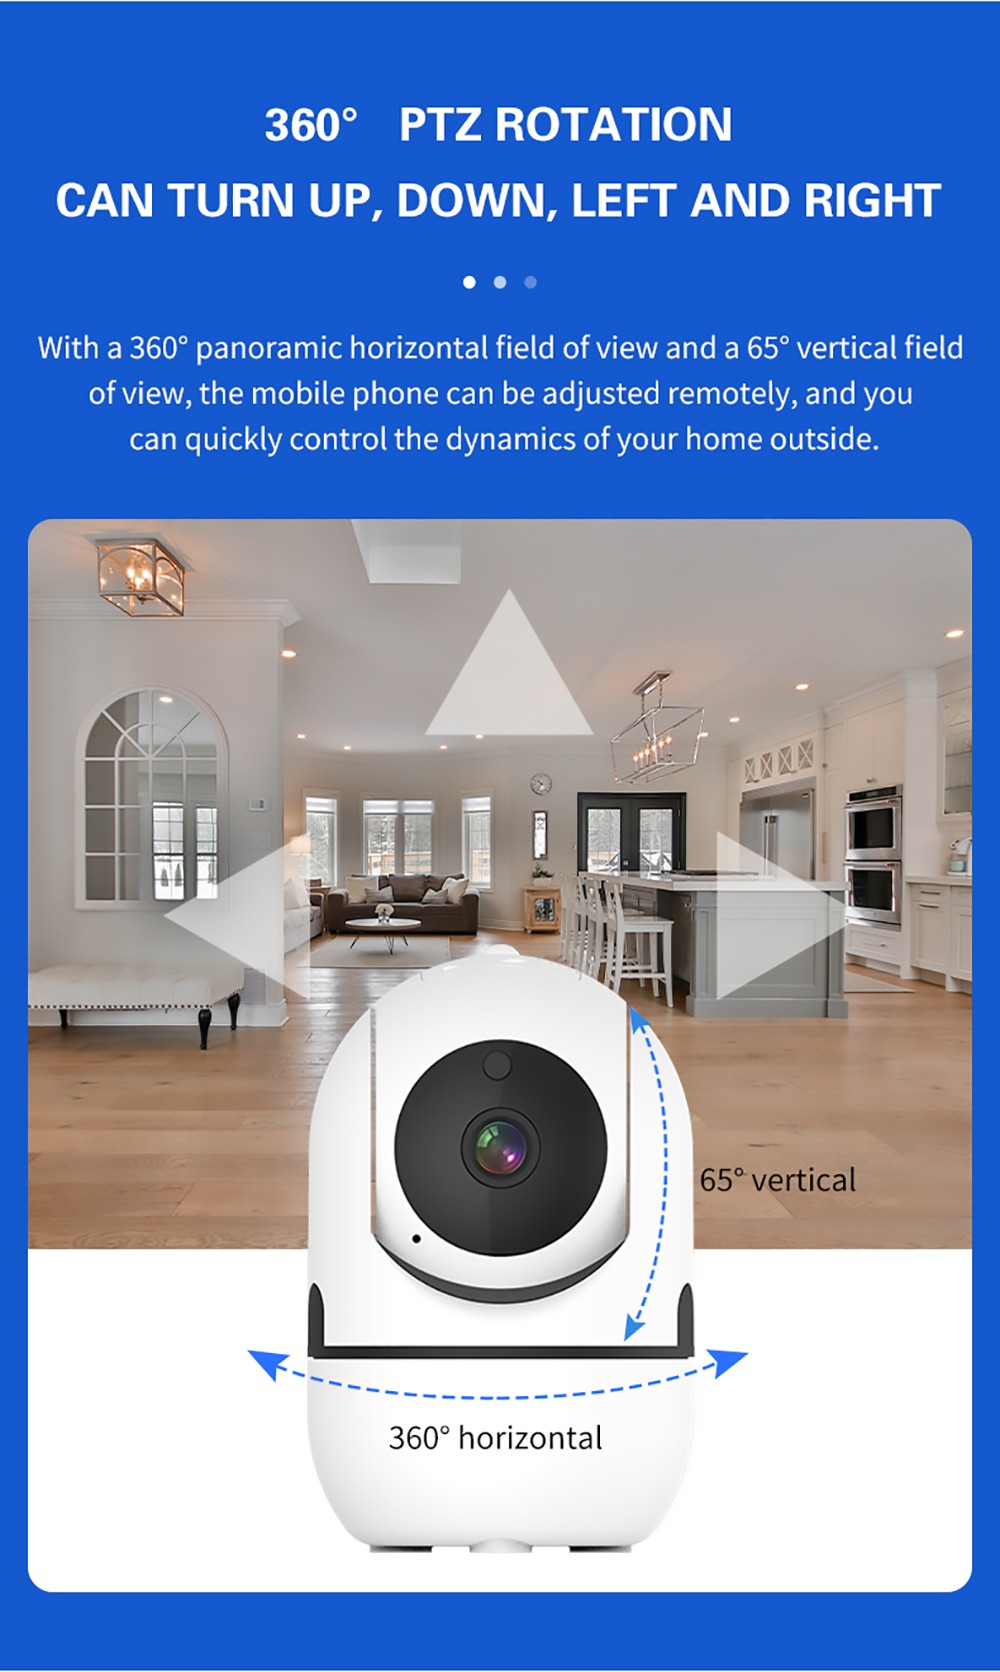 360 Degree Rotatable 1080p HD Camera, WiFi Wireless Smart Night Vision Camera, 2-way Voice AP Connection - EU Plug